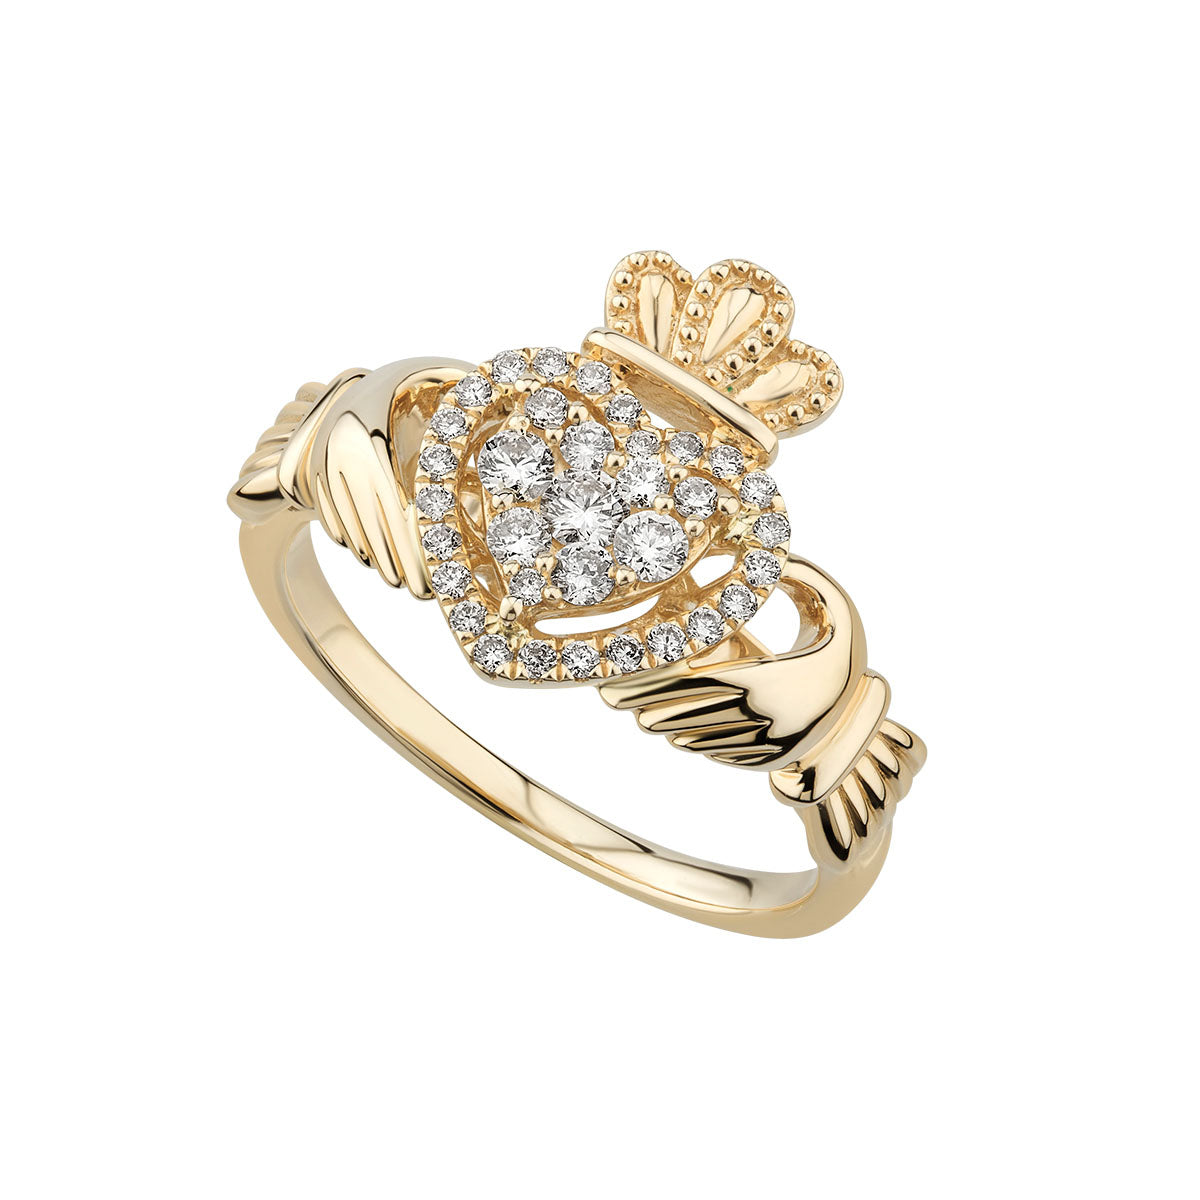 14k gold diamond heart claddagh ring s21096 from Solvar